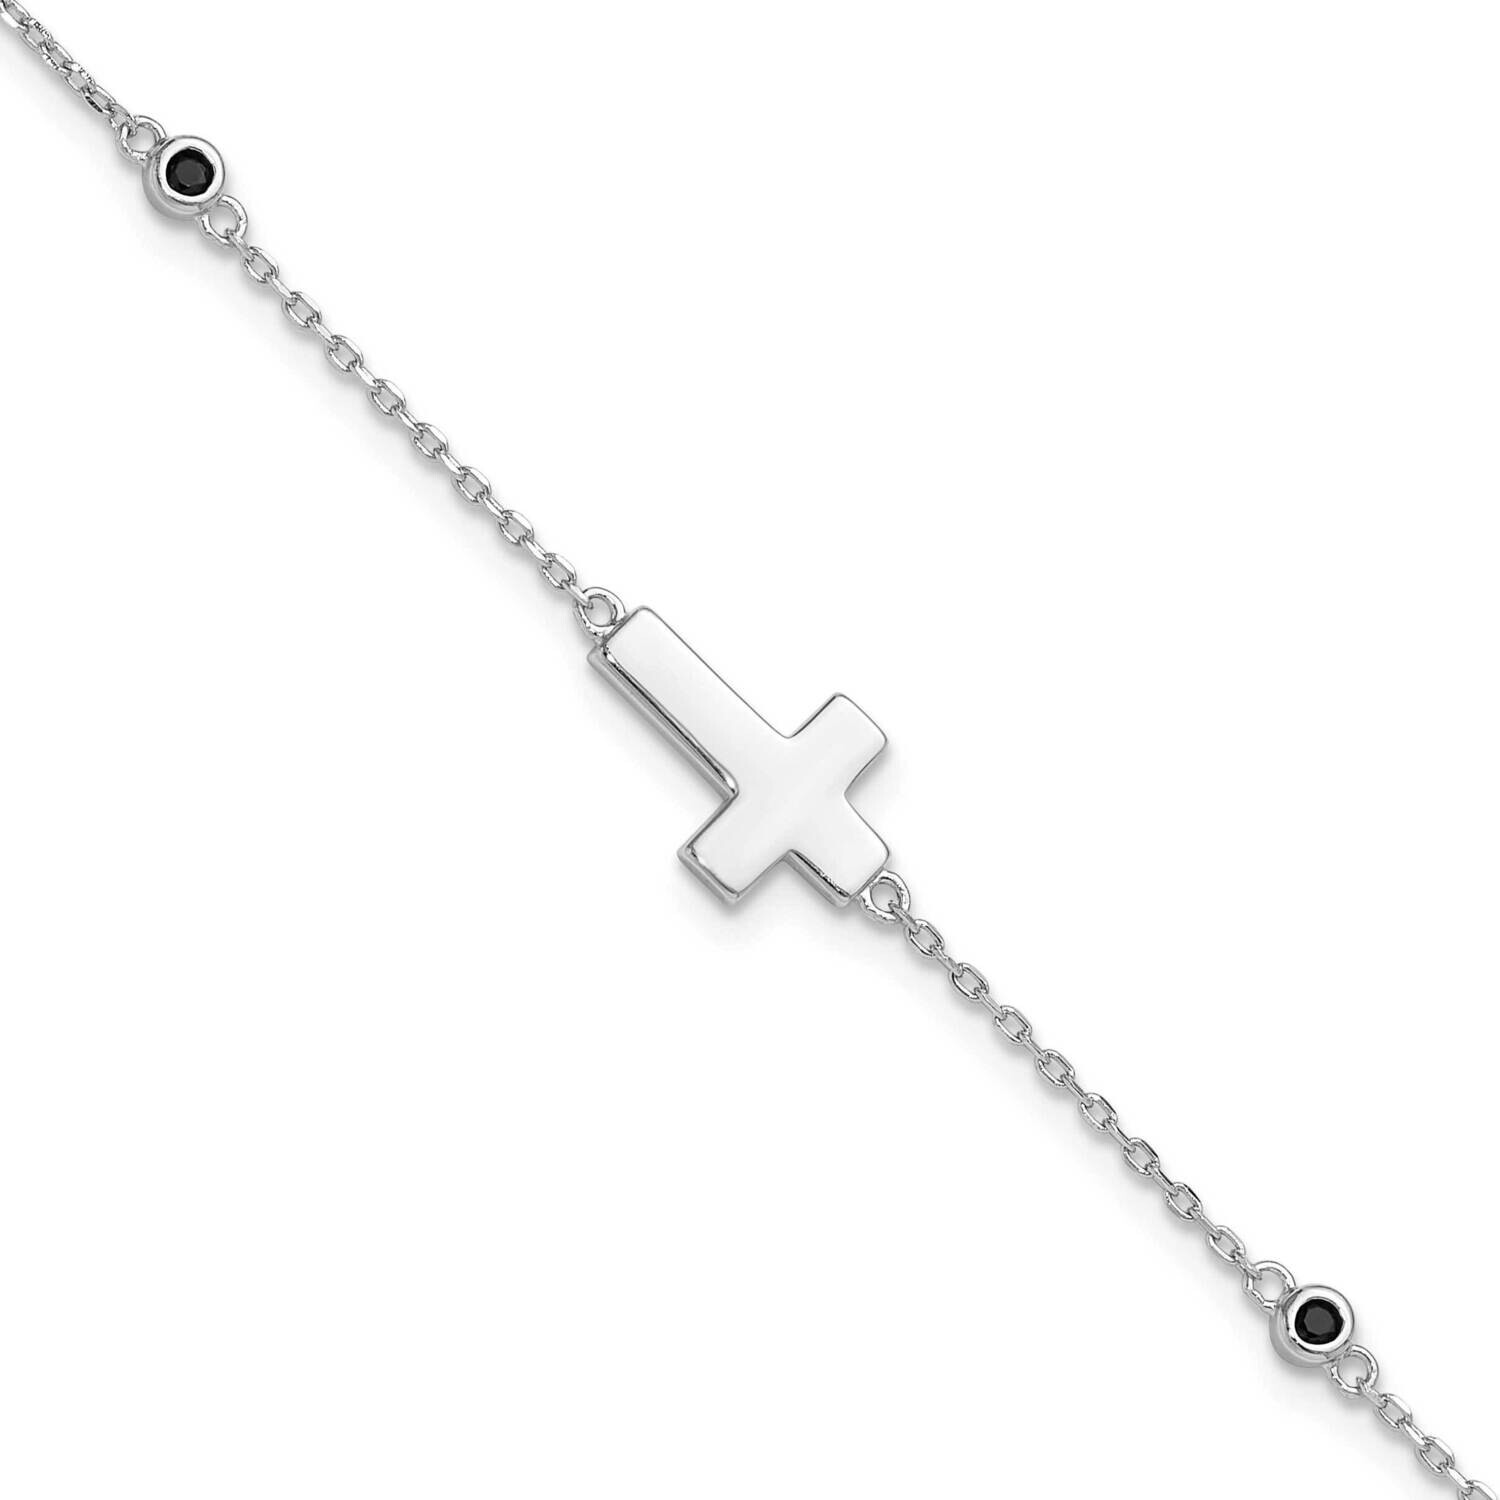 Cross Black Spinel 7 Inch 1 Inch Extender Bracelet Sterling Silver Rhodium-Plated QG6378-7